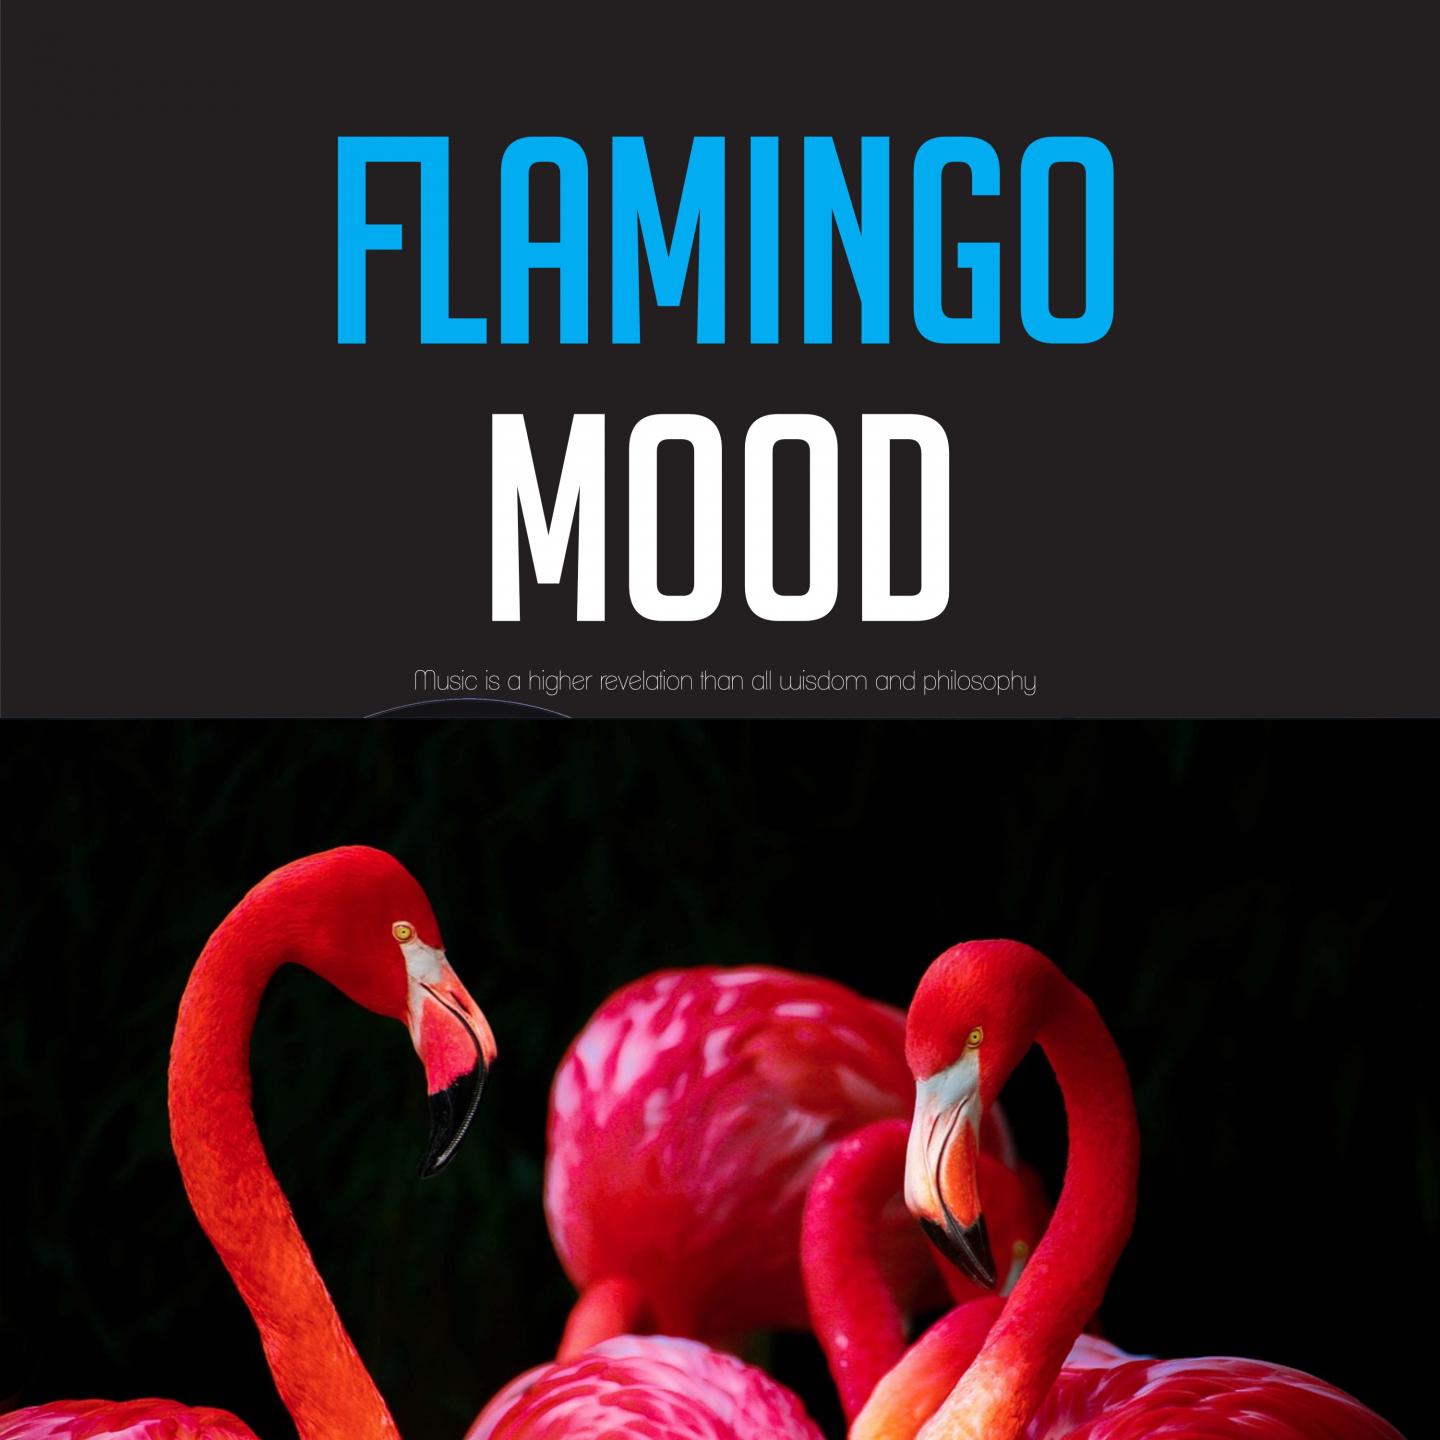 Flamingo Mood